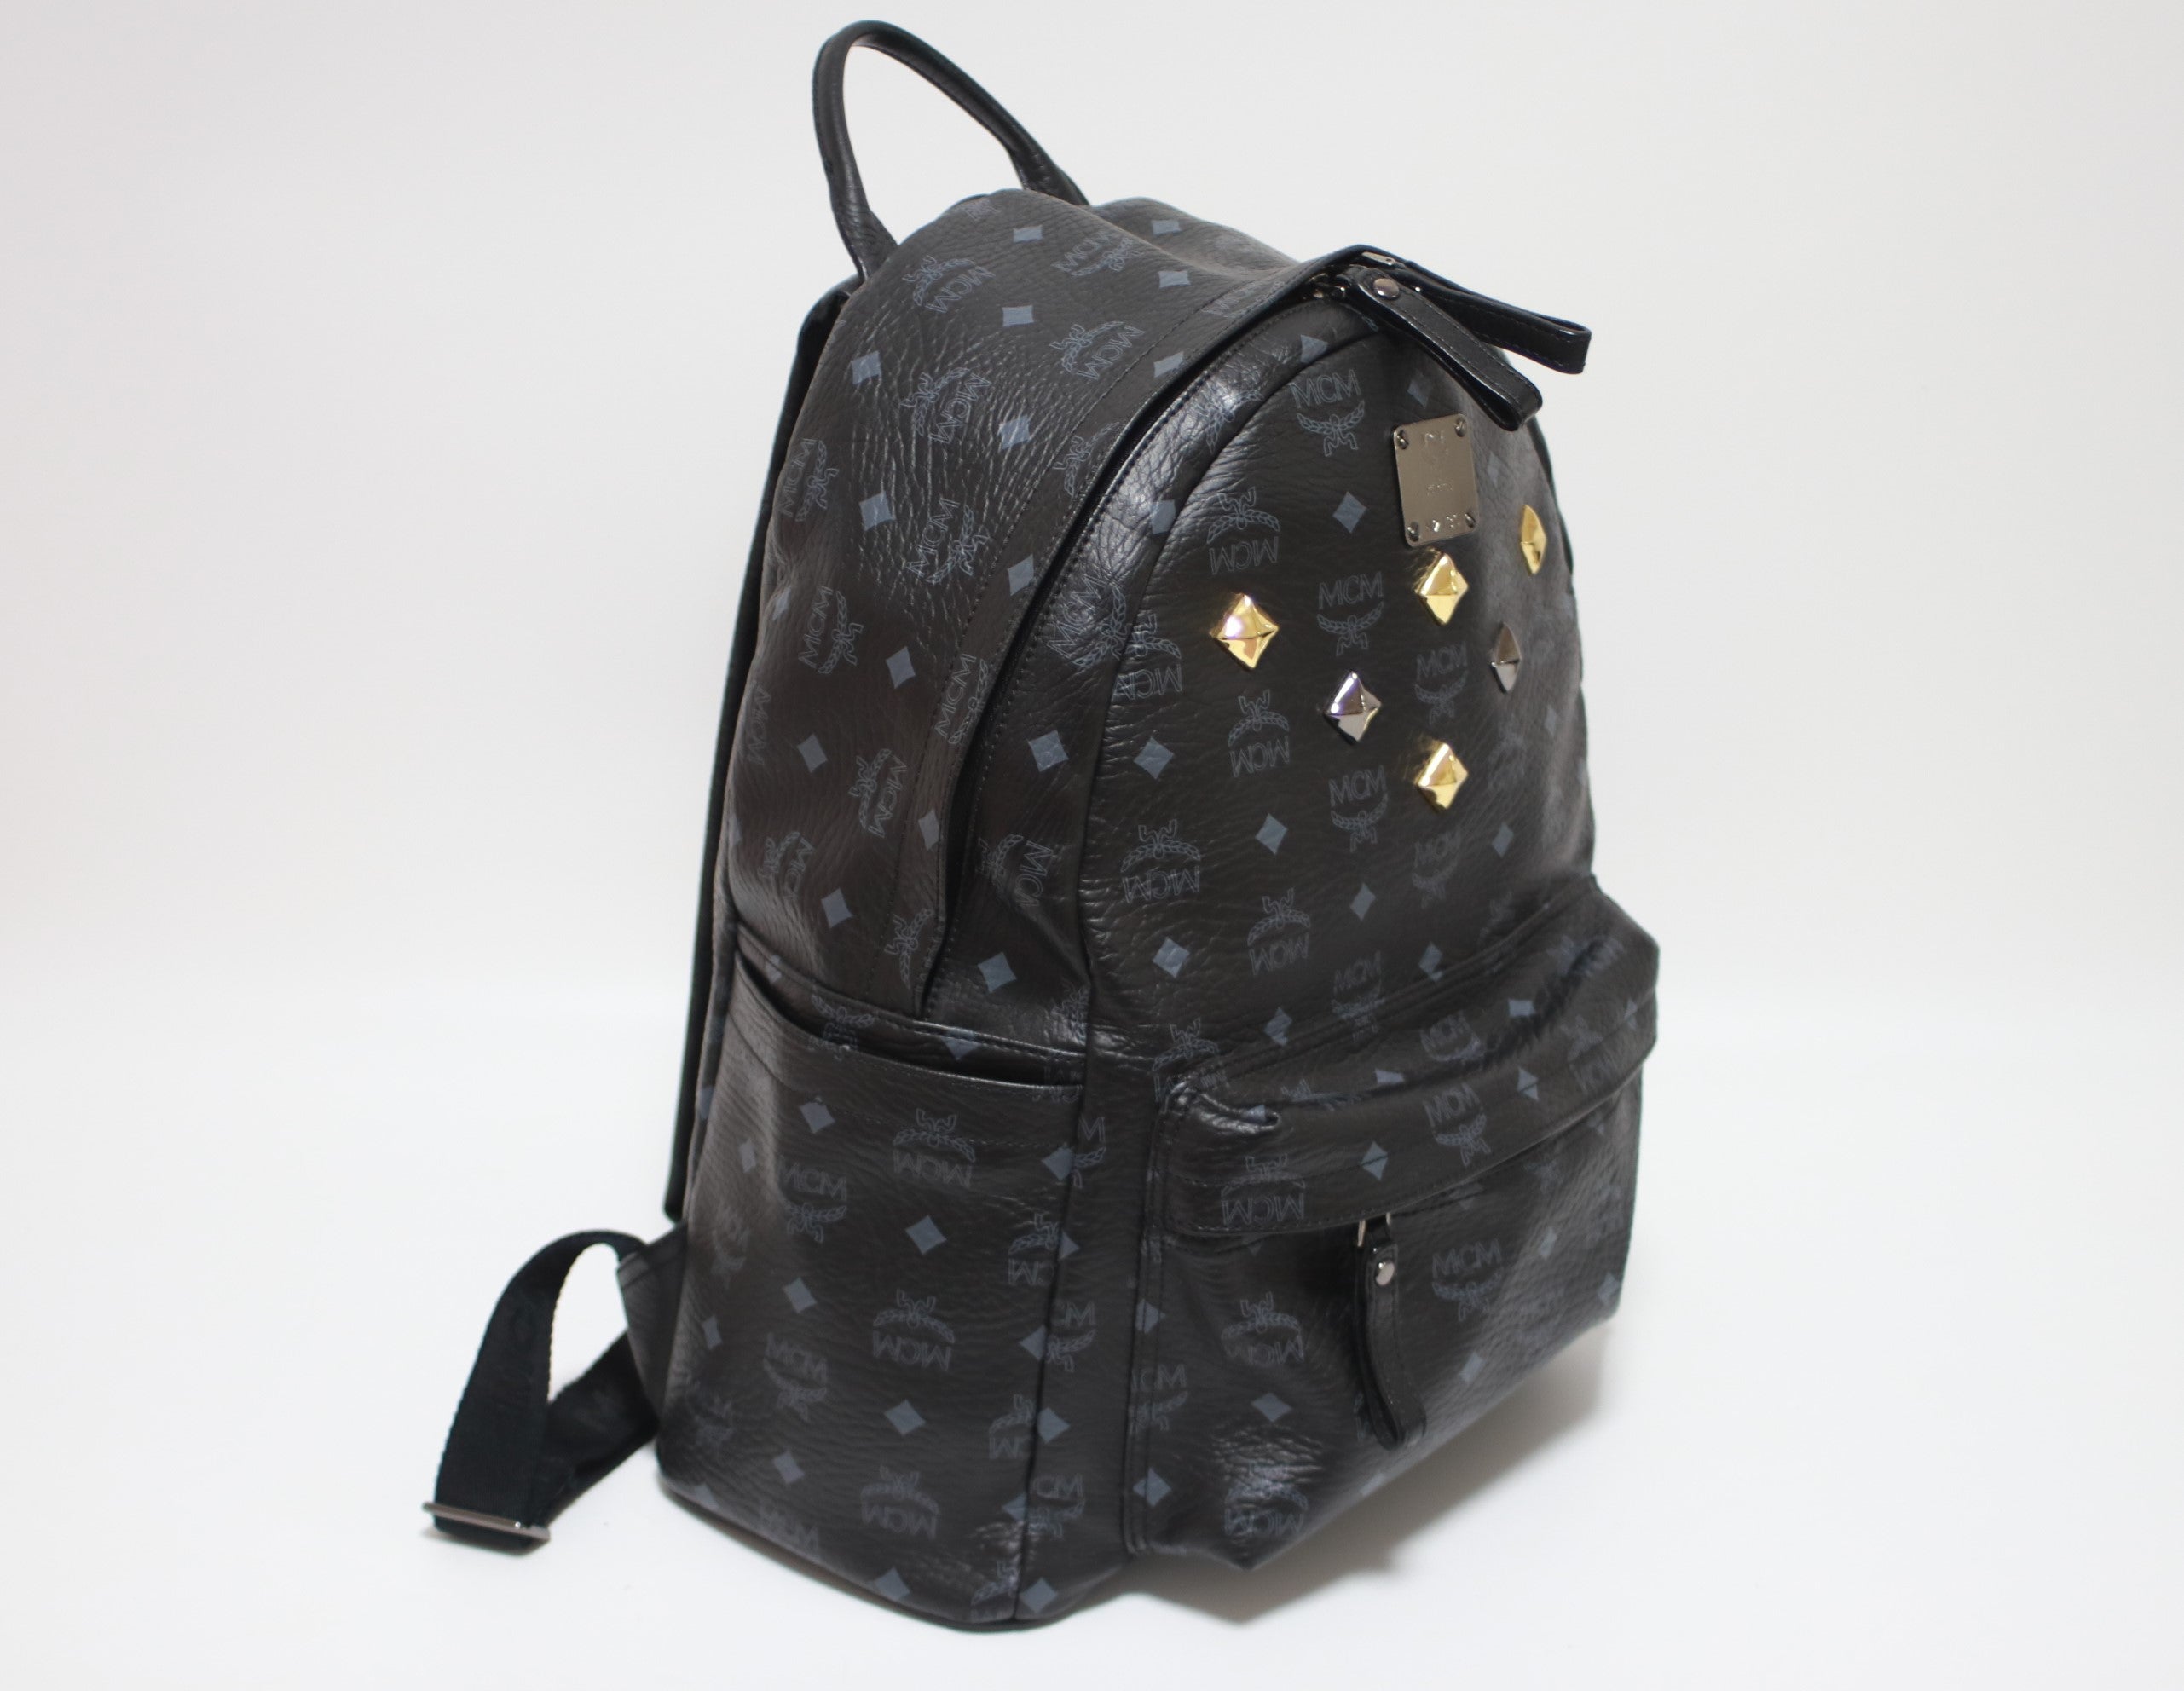 MCM Backpack Black Color Used (7783)